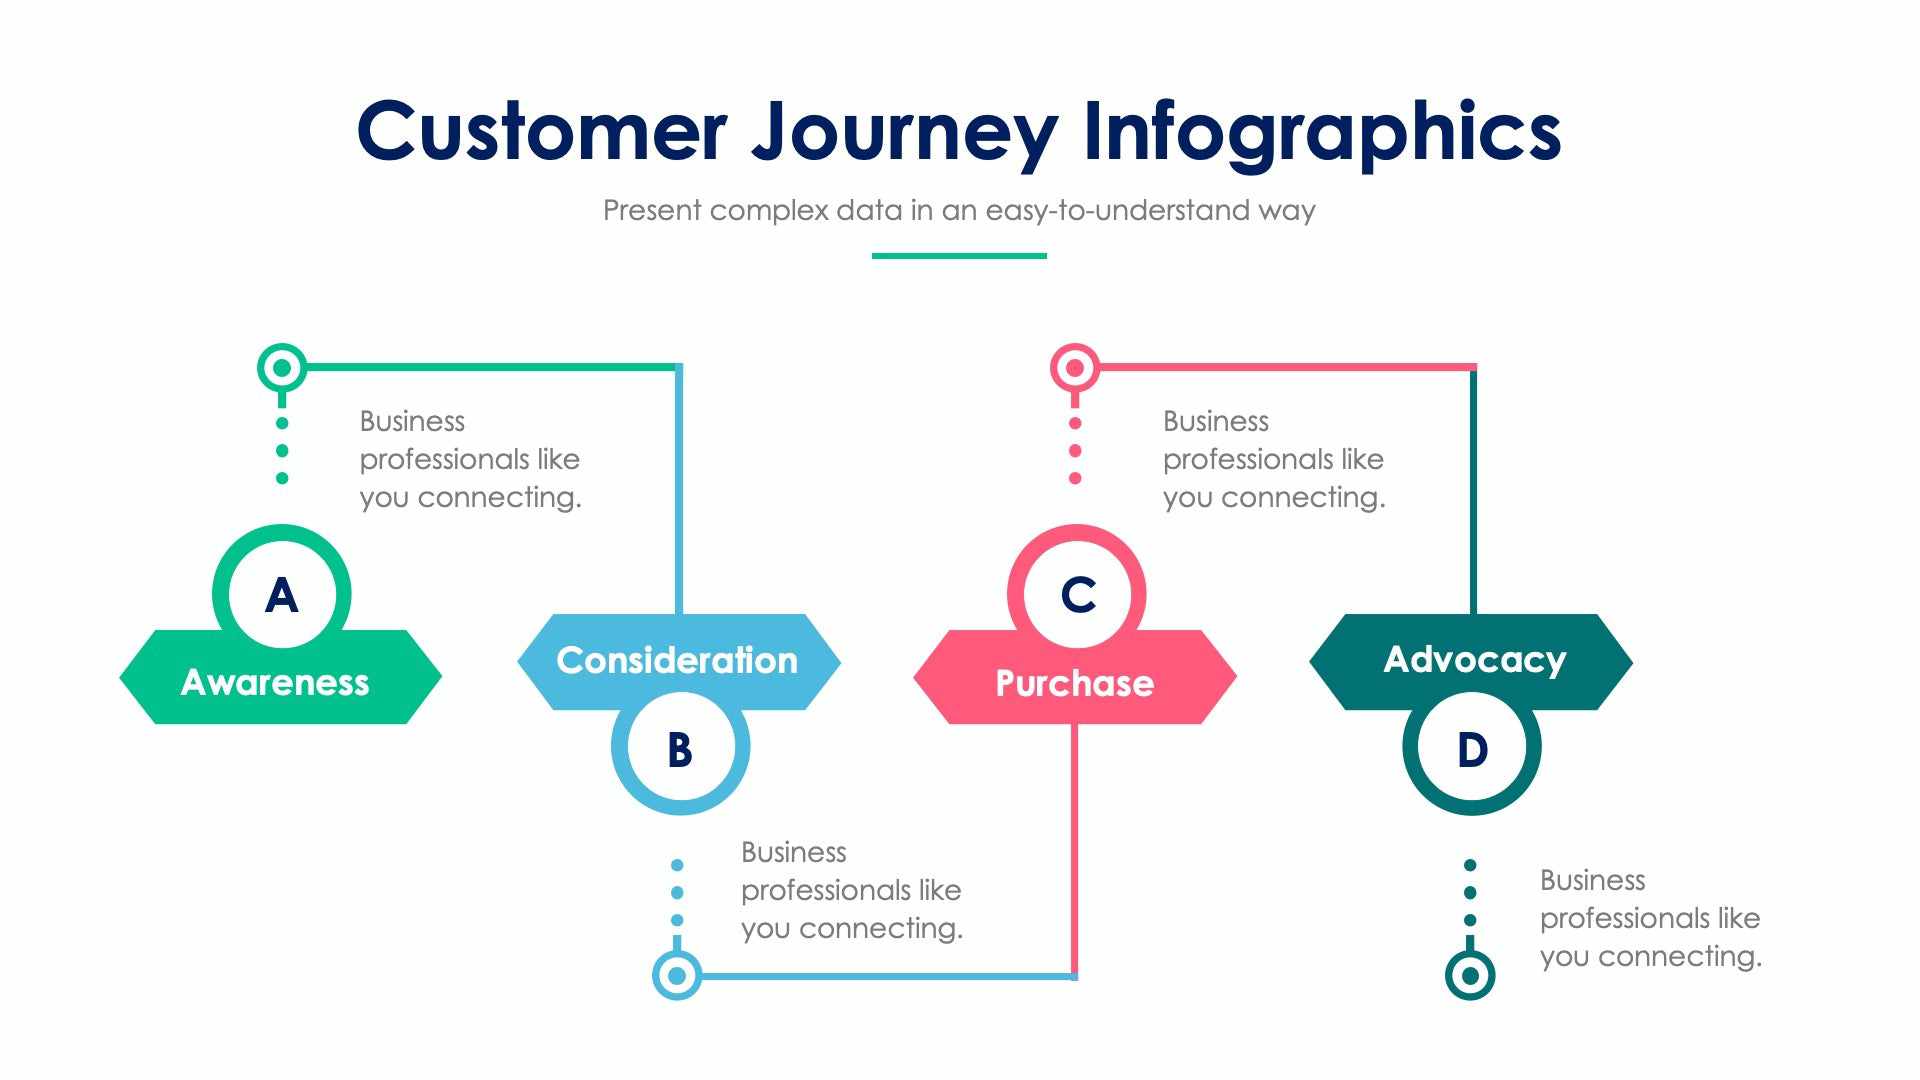 consumer journey infographic